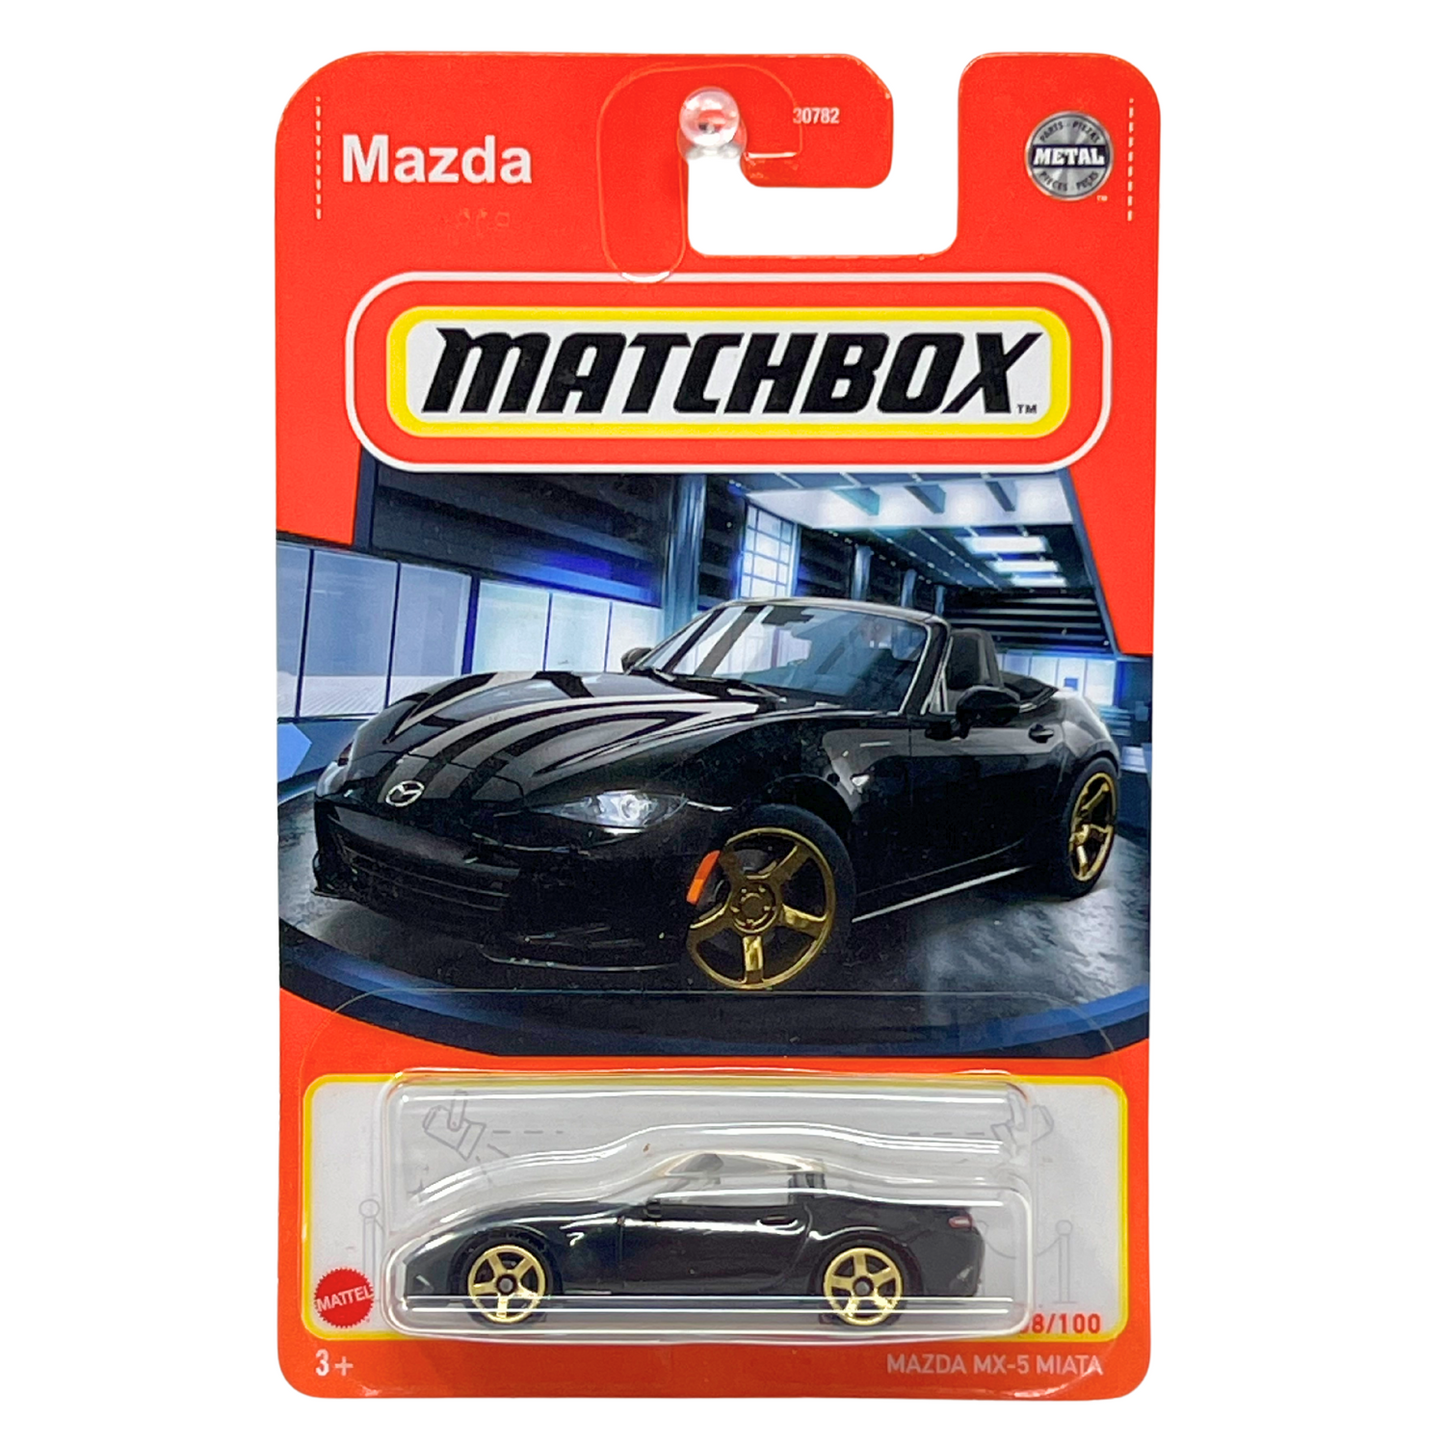 Matchbox Mazda MX-5 Miata JDM 1:64 Diecast Black